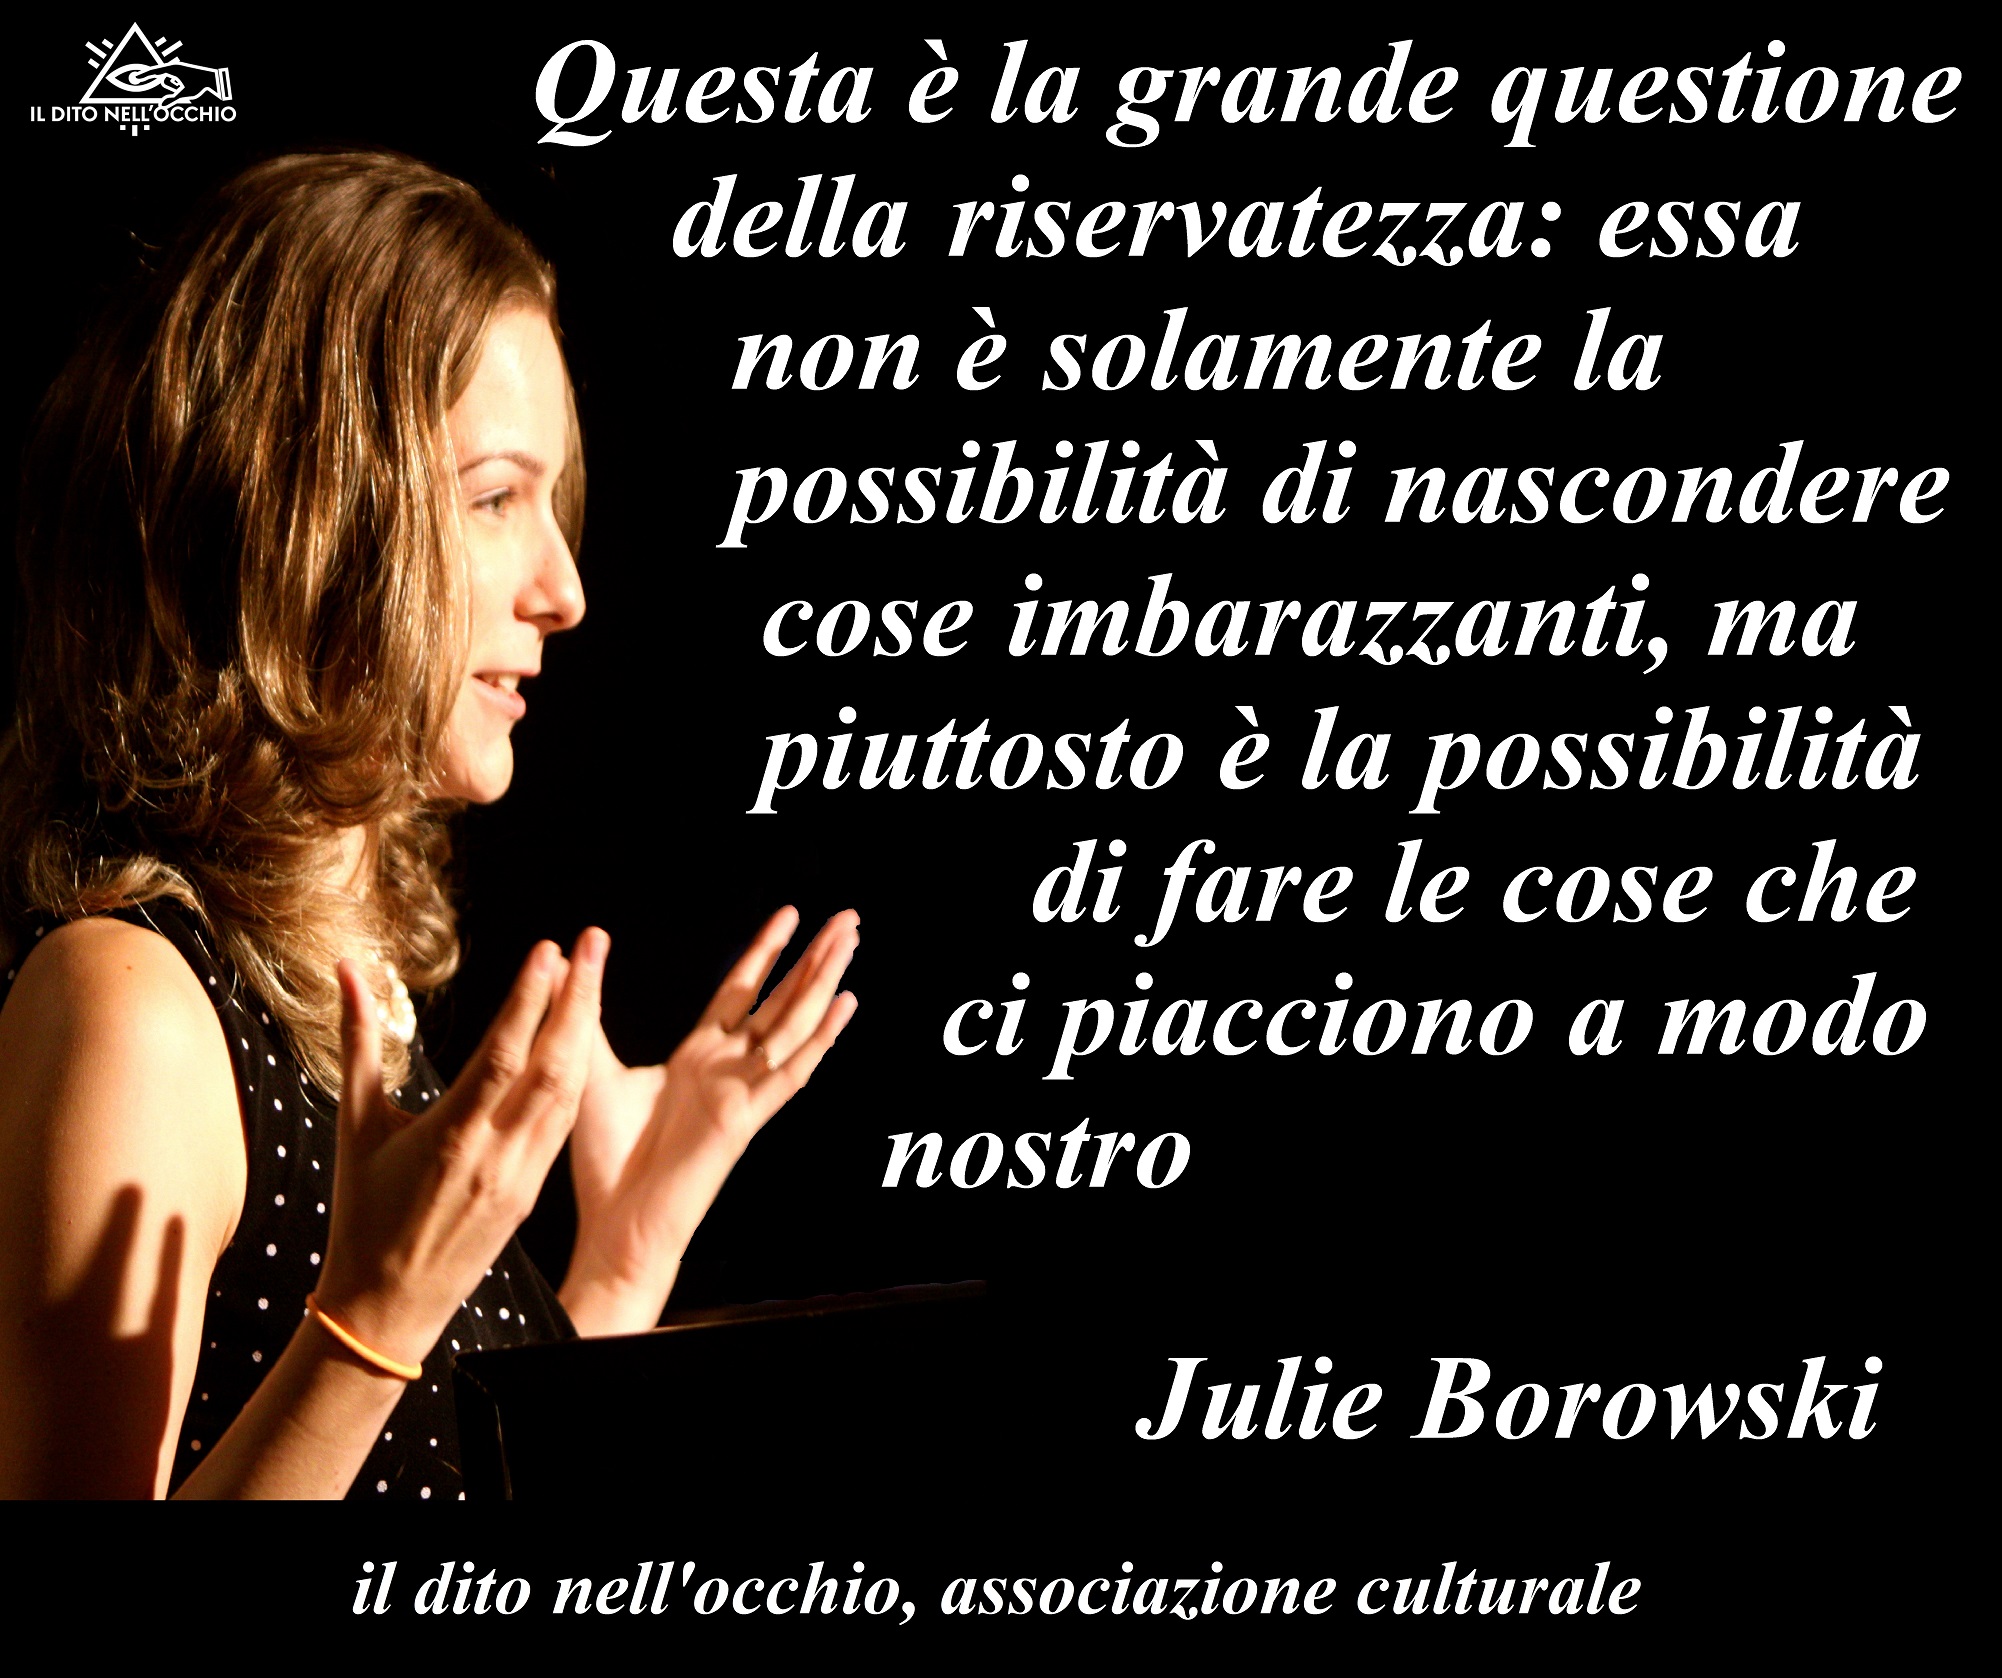 Julie Borowski